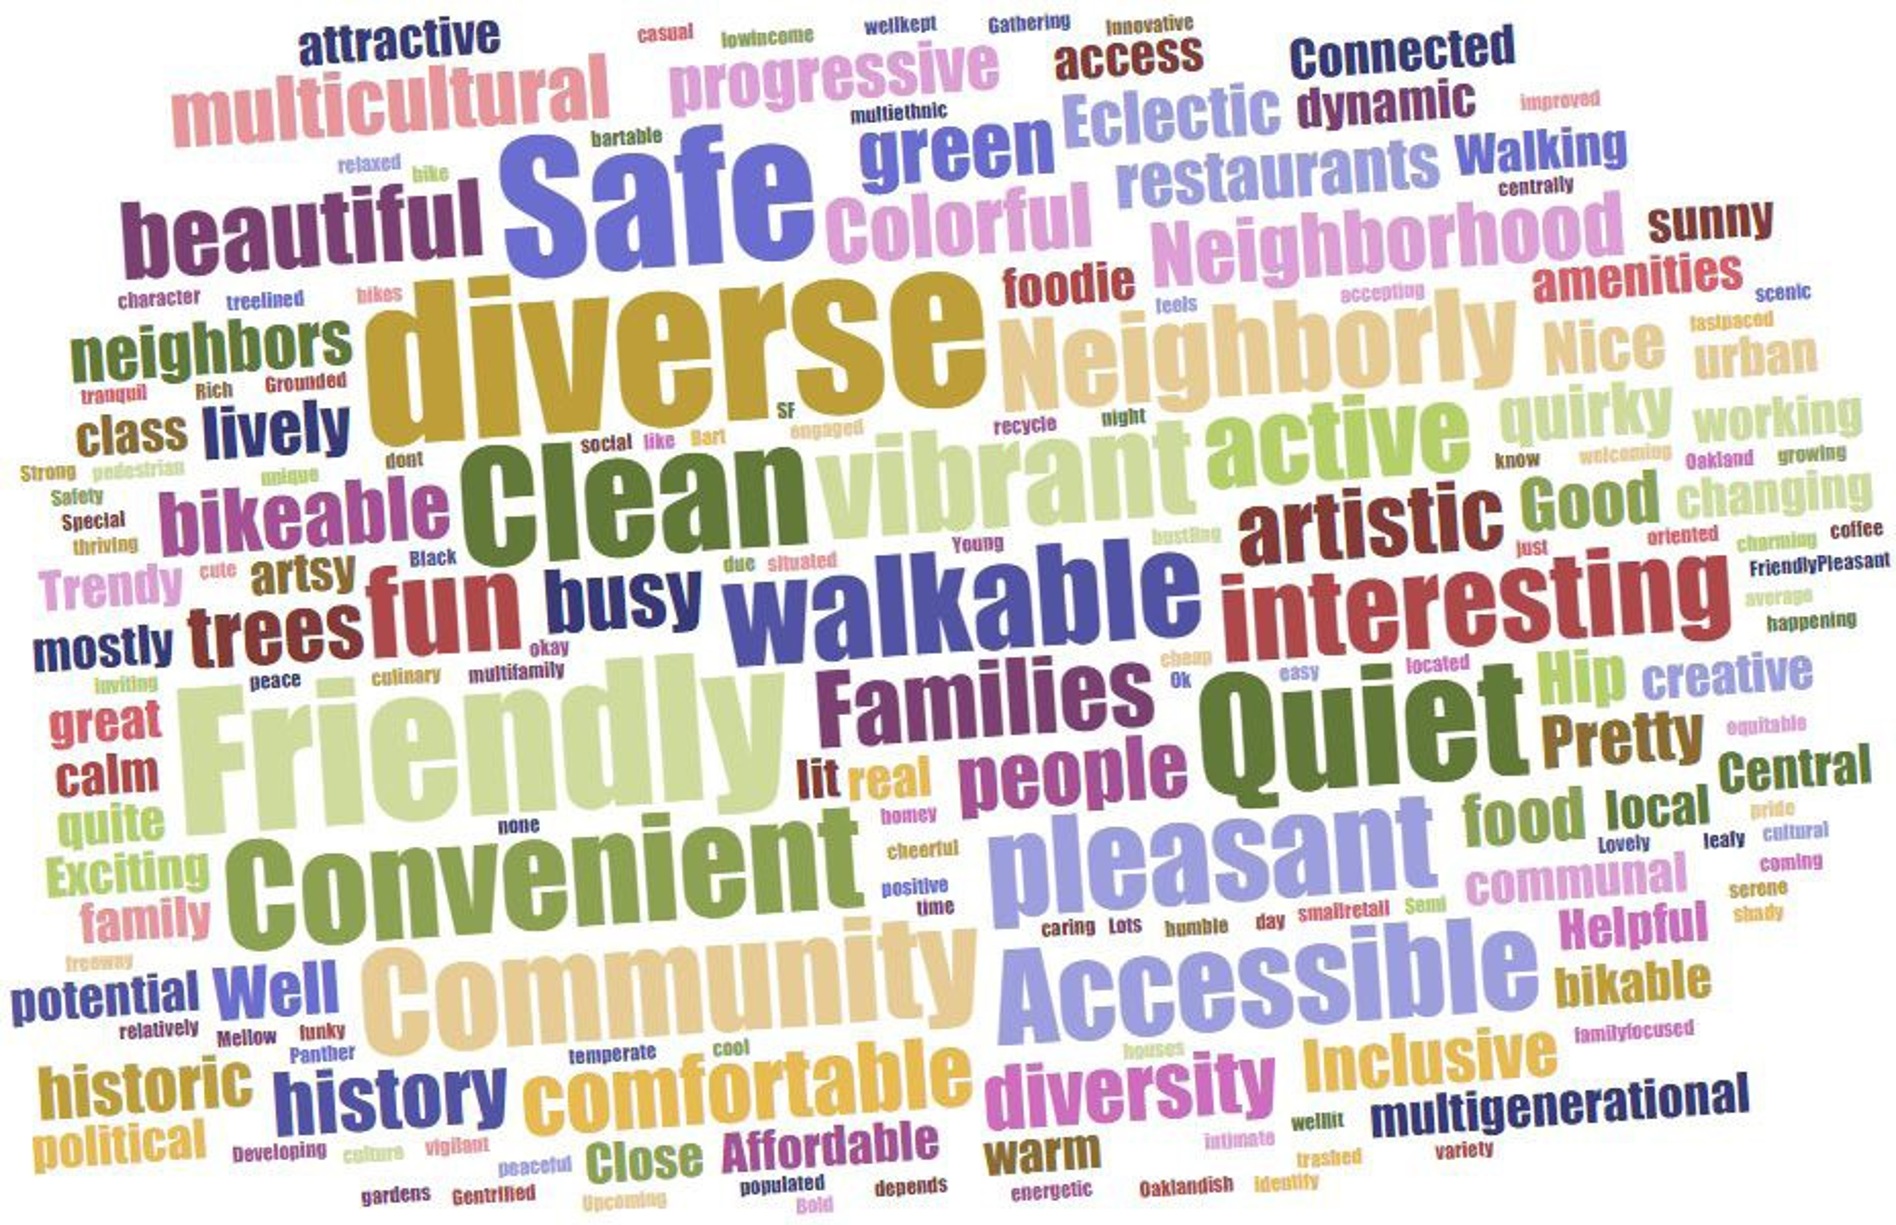 Word cloud describing positive attributes of the survey respondents' neighborhoods